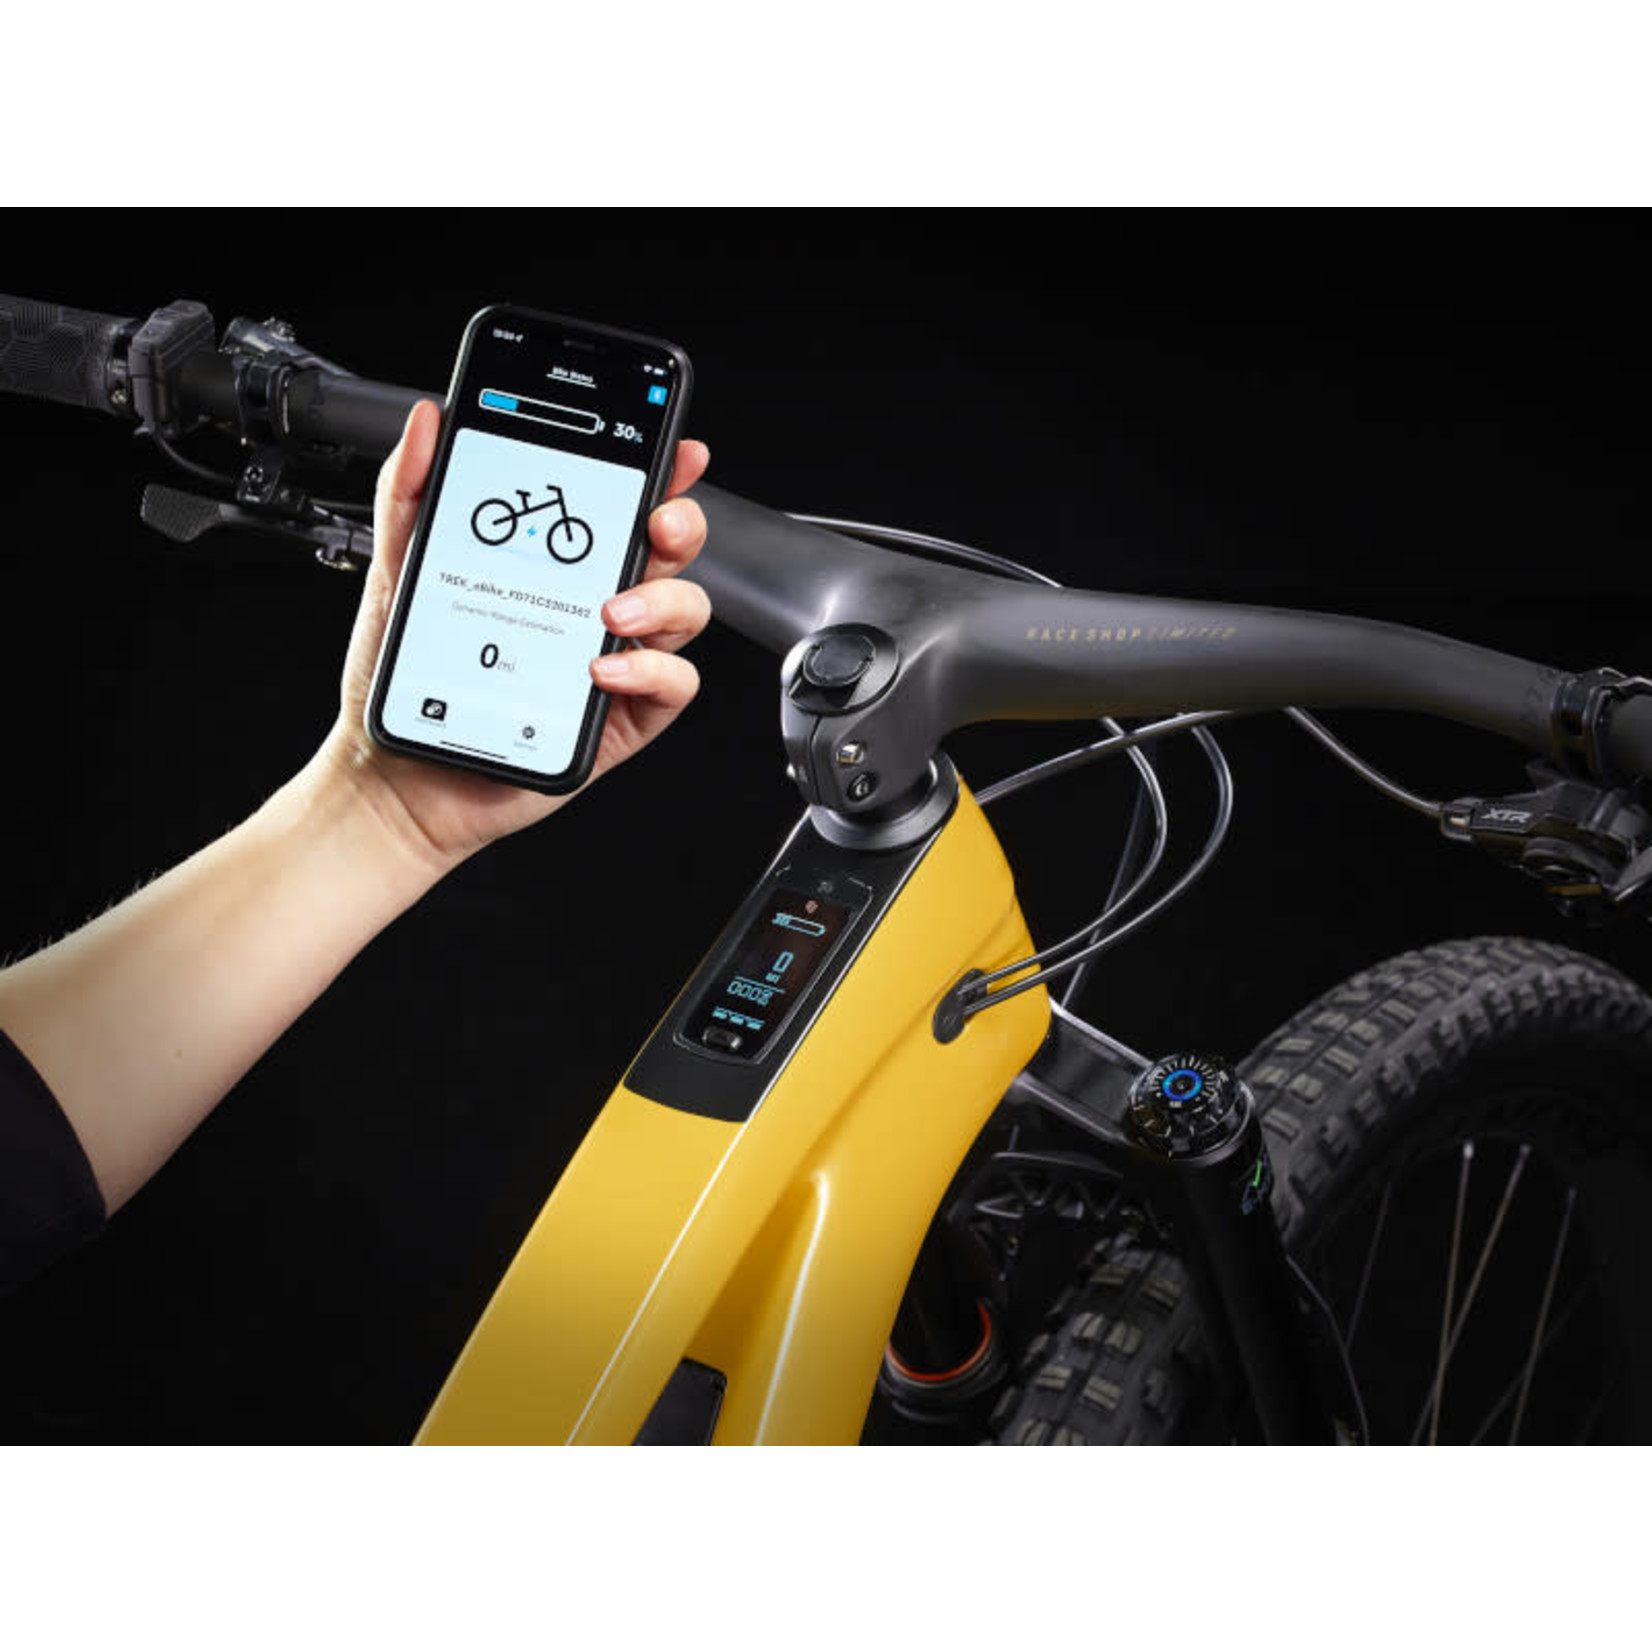 Trek 2023 Trek Fuel EXe 9.9 XTR Mountain Bike PRE-ORDER NOW!!!